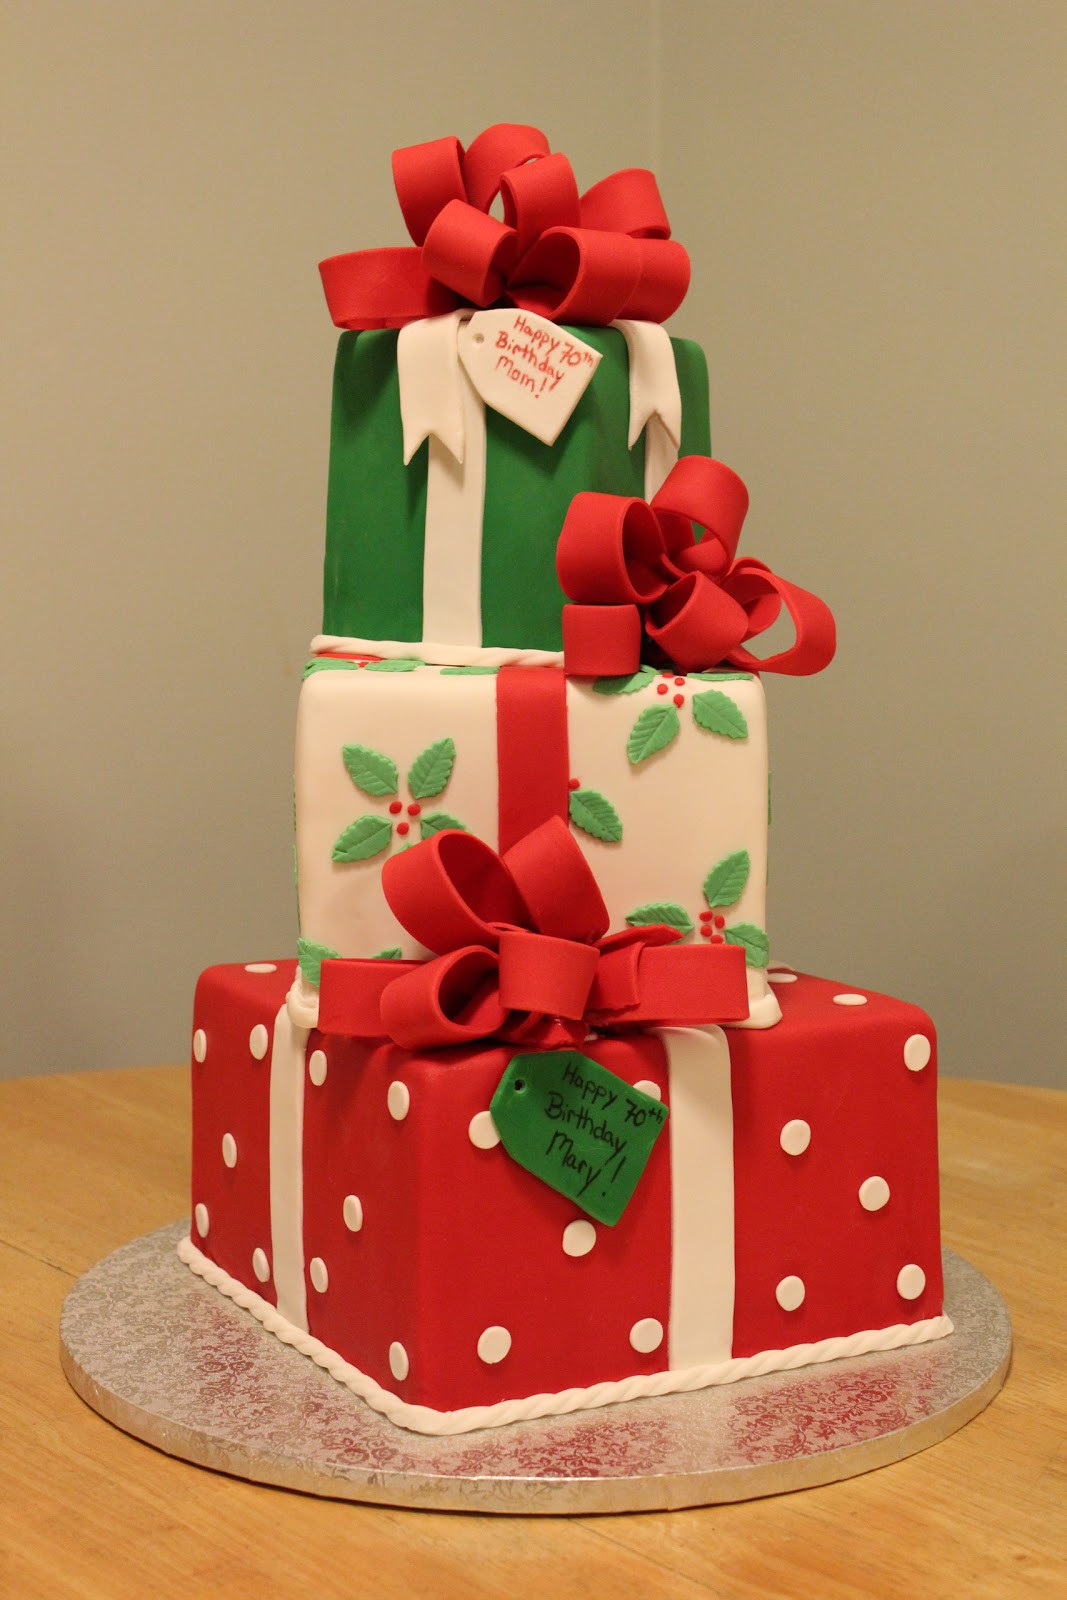 Christmas Birthday Cakes
 The Red Headed Baker Christmas Present Box Cake